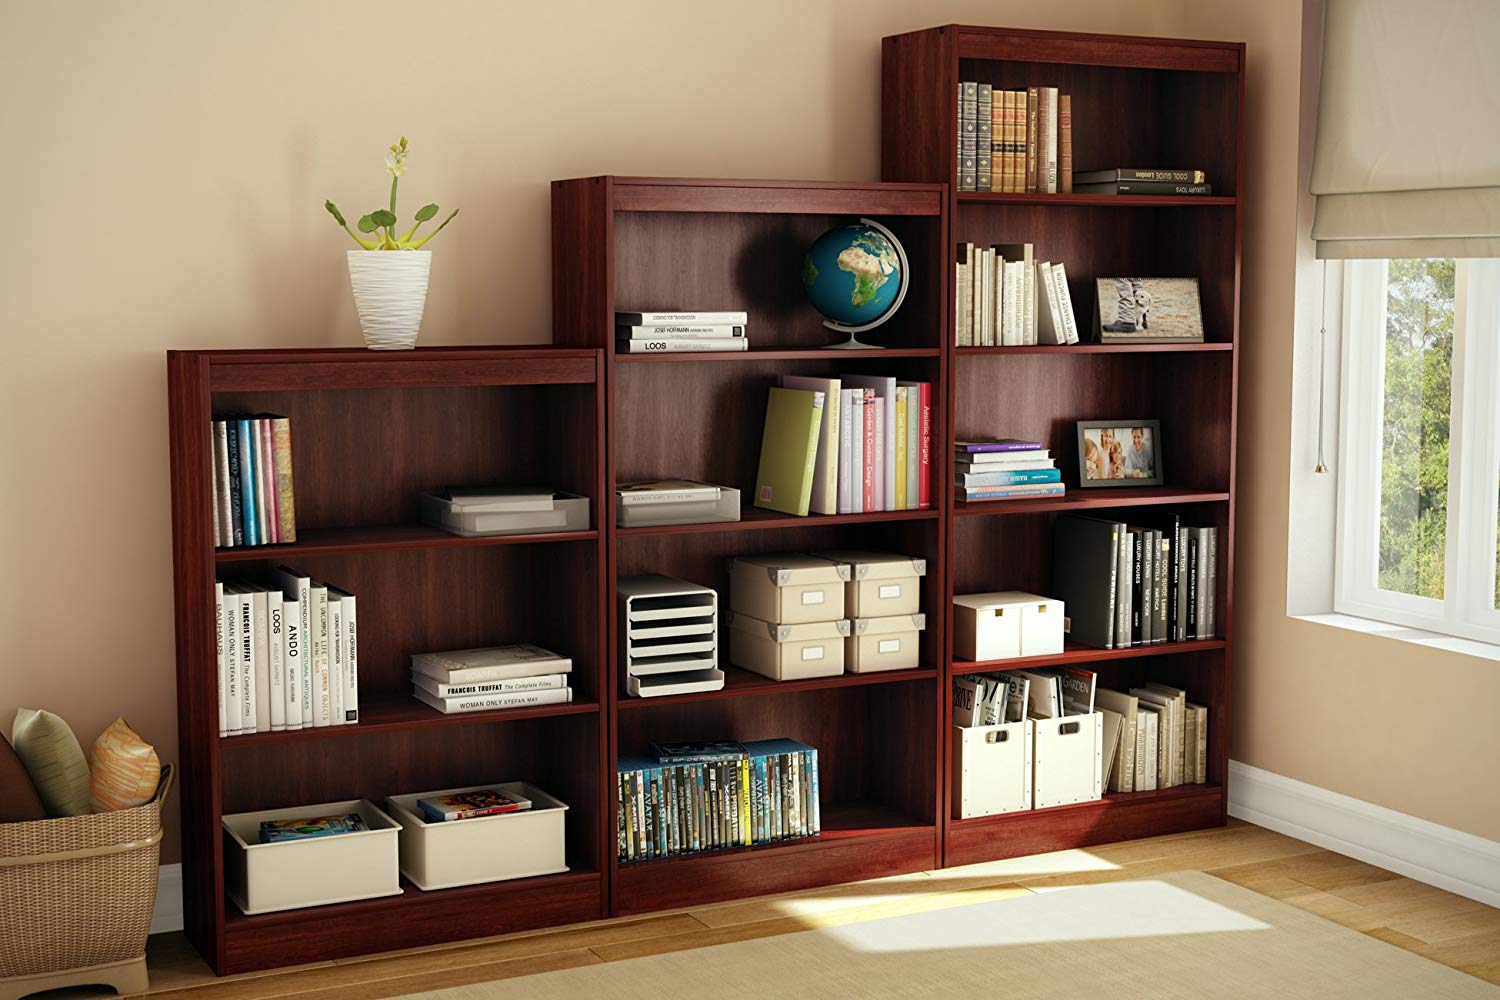 Bookshelf amazon.com: South Shore Axess Collection Bookshelf with 4 shelves, Royal Cherry: Kitchen & MKOGPZA